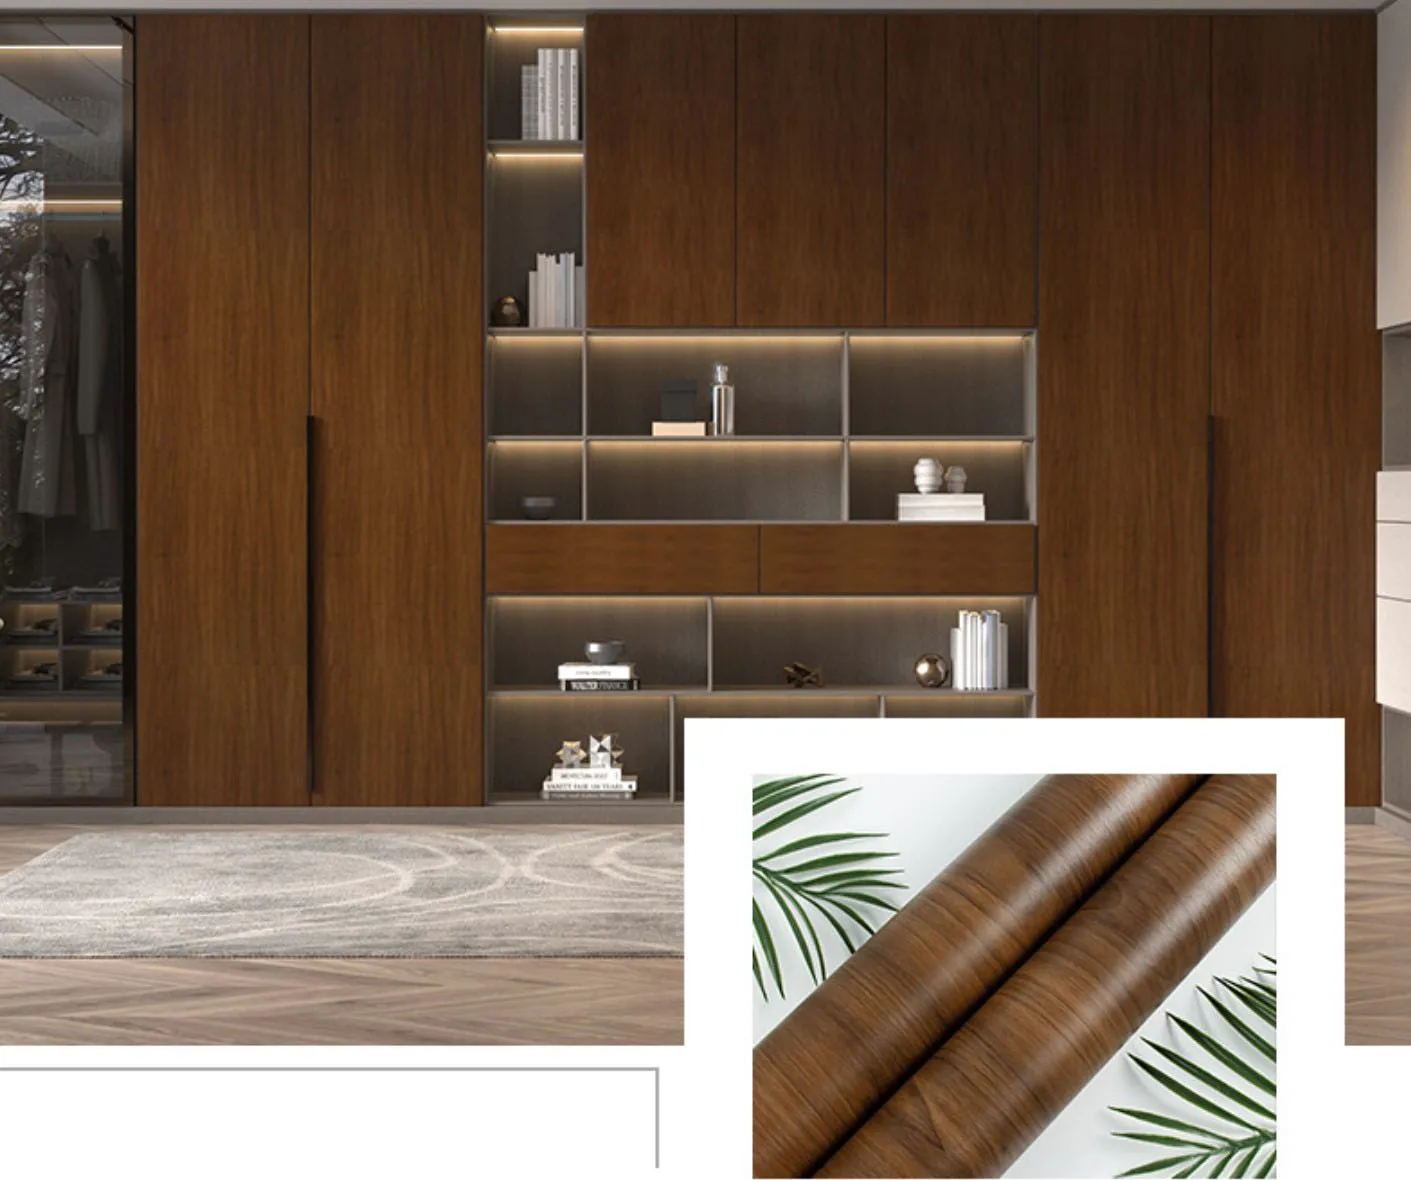 Self Adhesive Wallpaper Texture Laminate Kitchen Cabinet Wrap Furniture Sticker Vinyl Wood Grain PVC Film